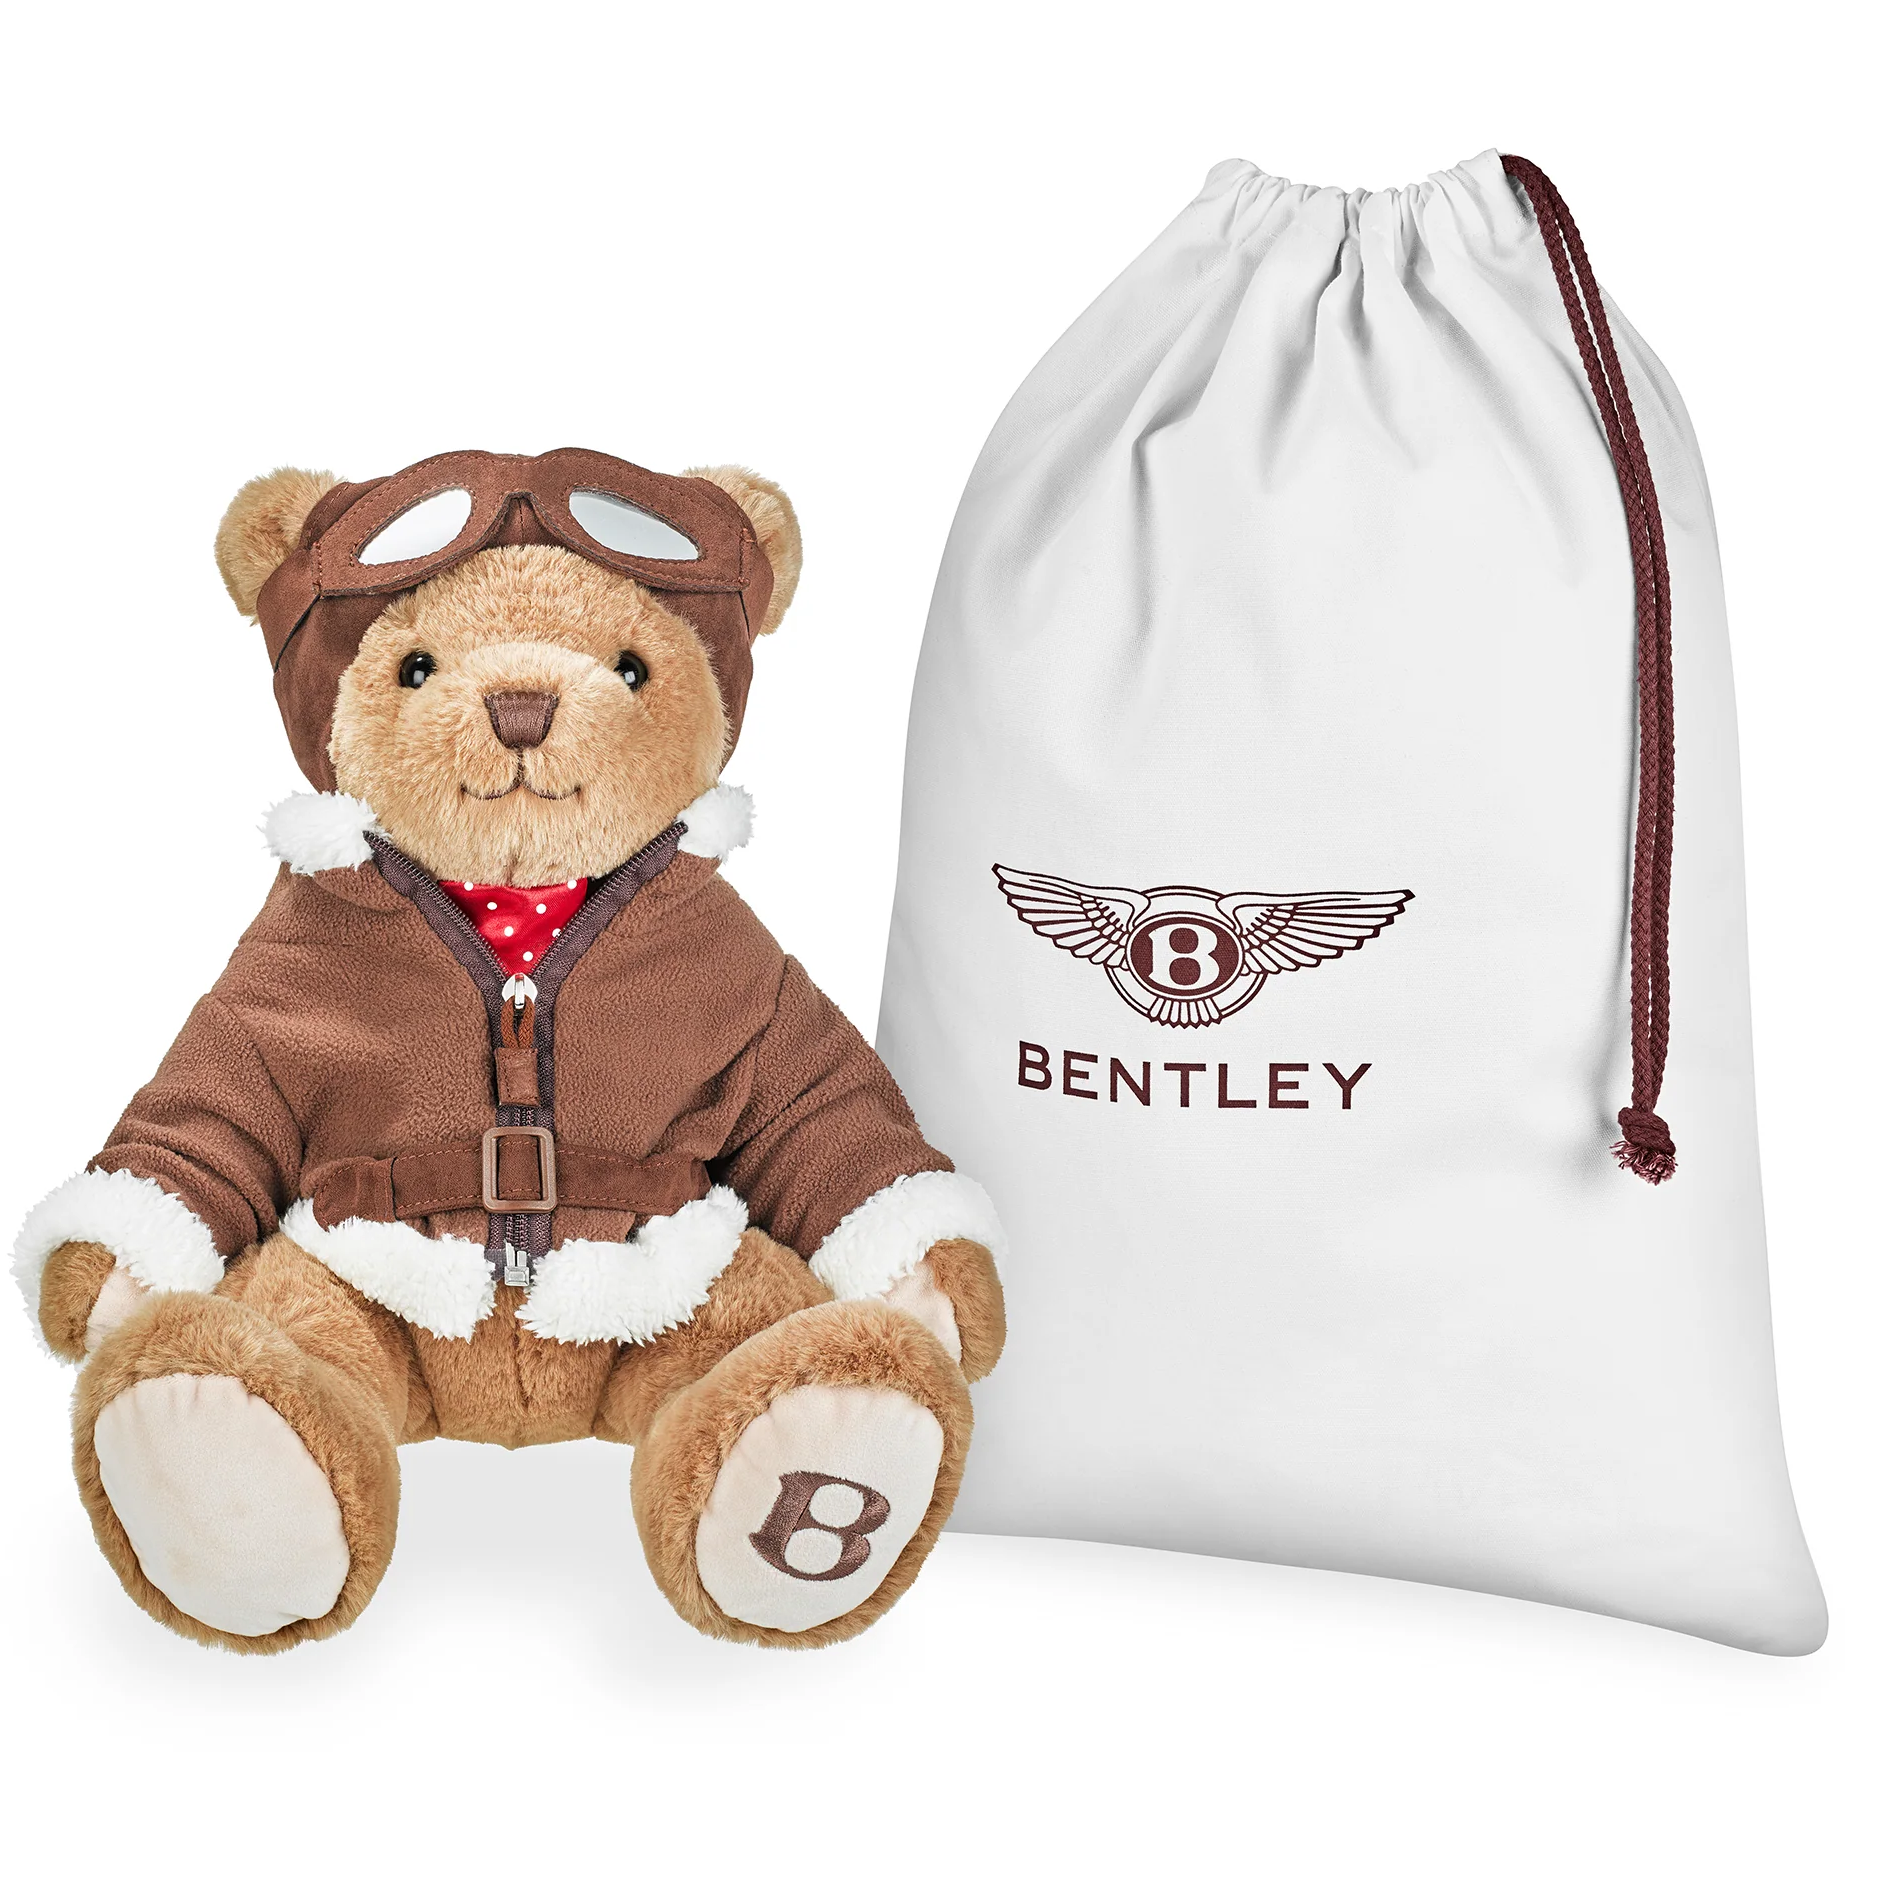 Bentley cars teddy bear